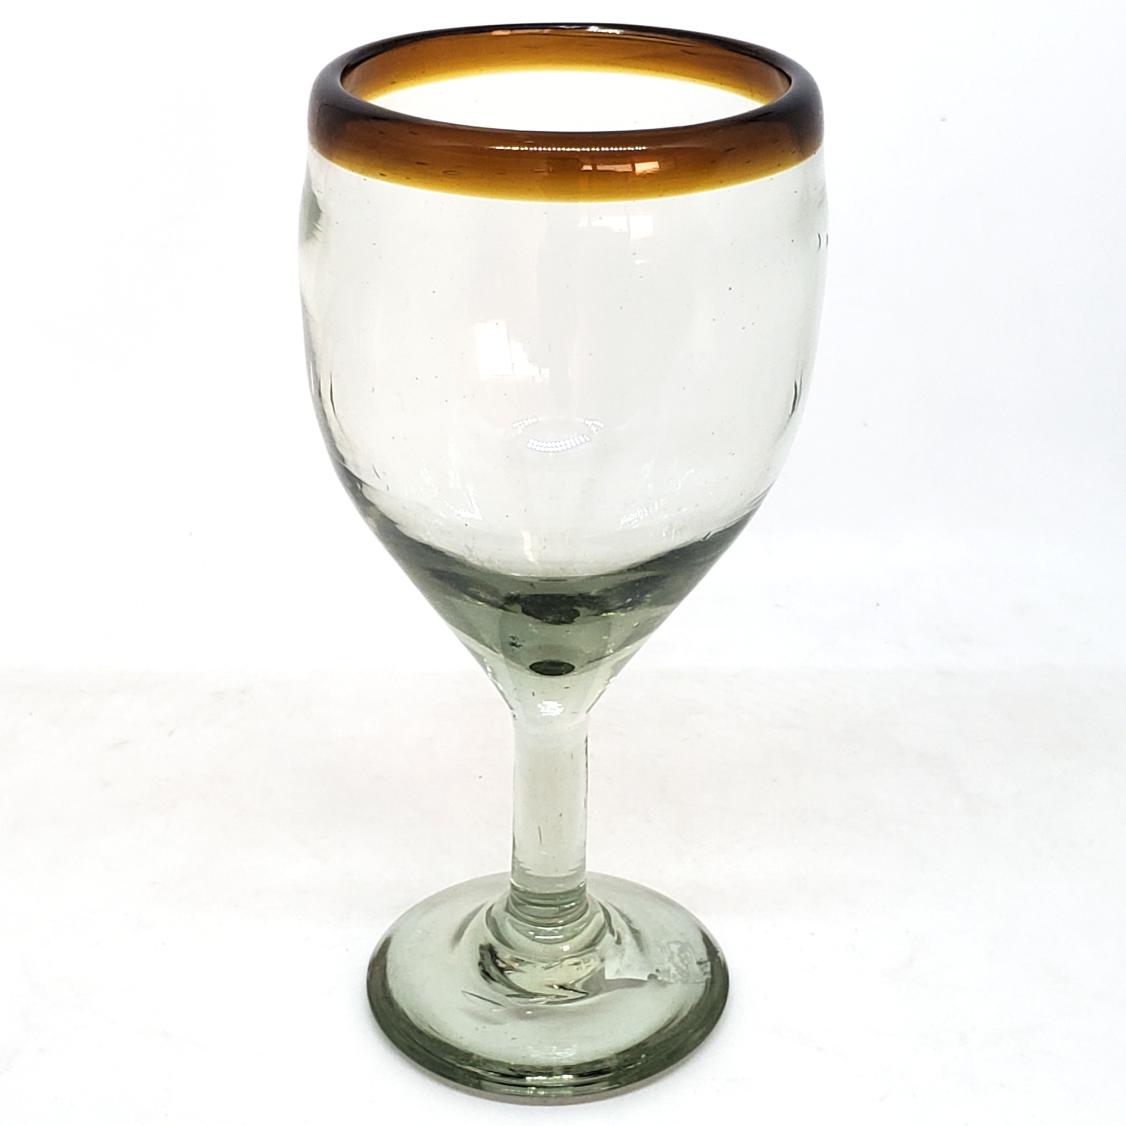 Ofertas / Juego de 6 copas para vino con borde ambar / Capture el aroma de un fino vino tinto con stas copas decoradas con un borde ambar.